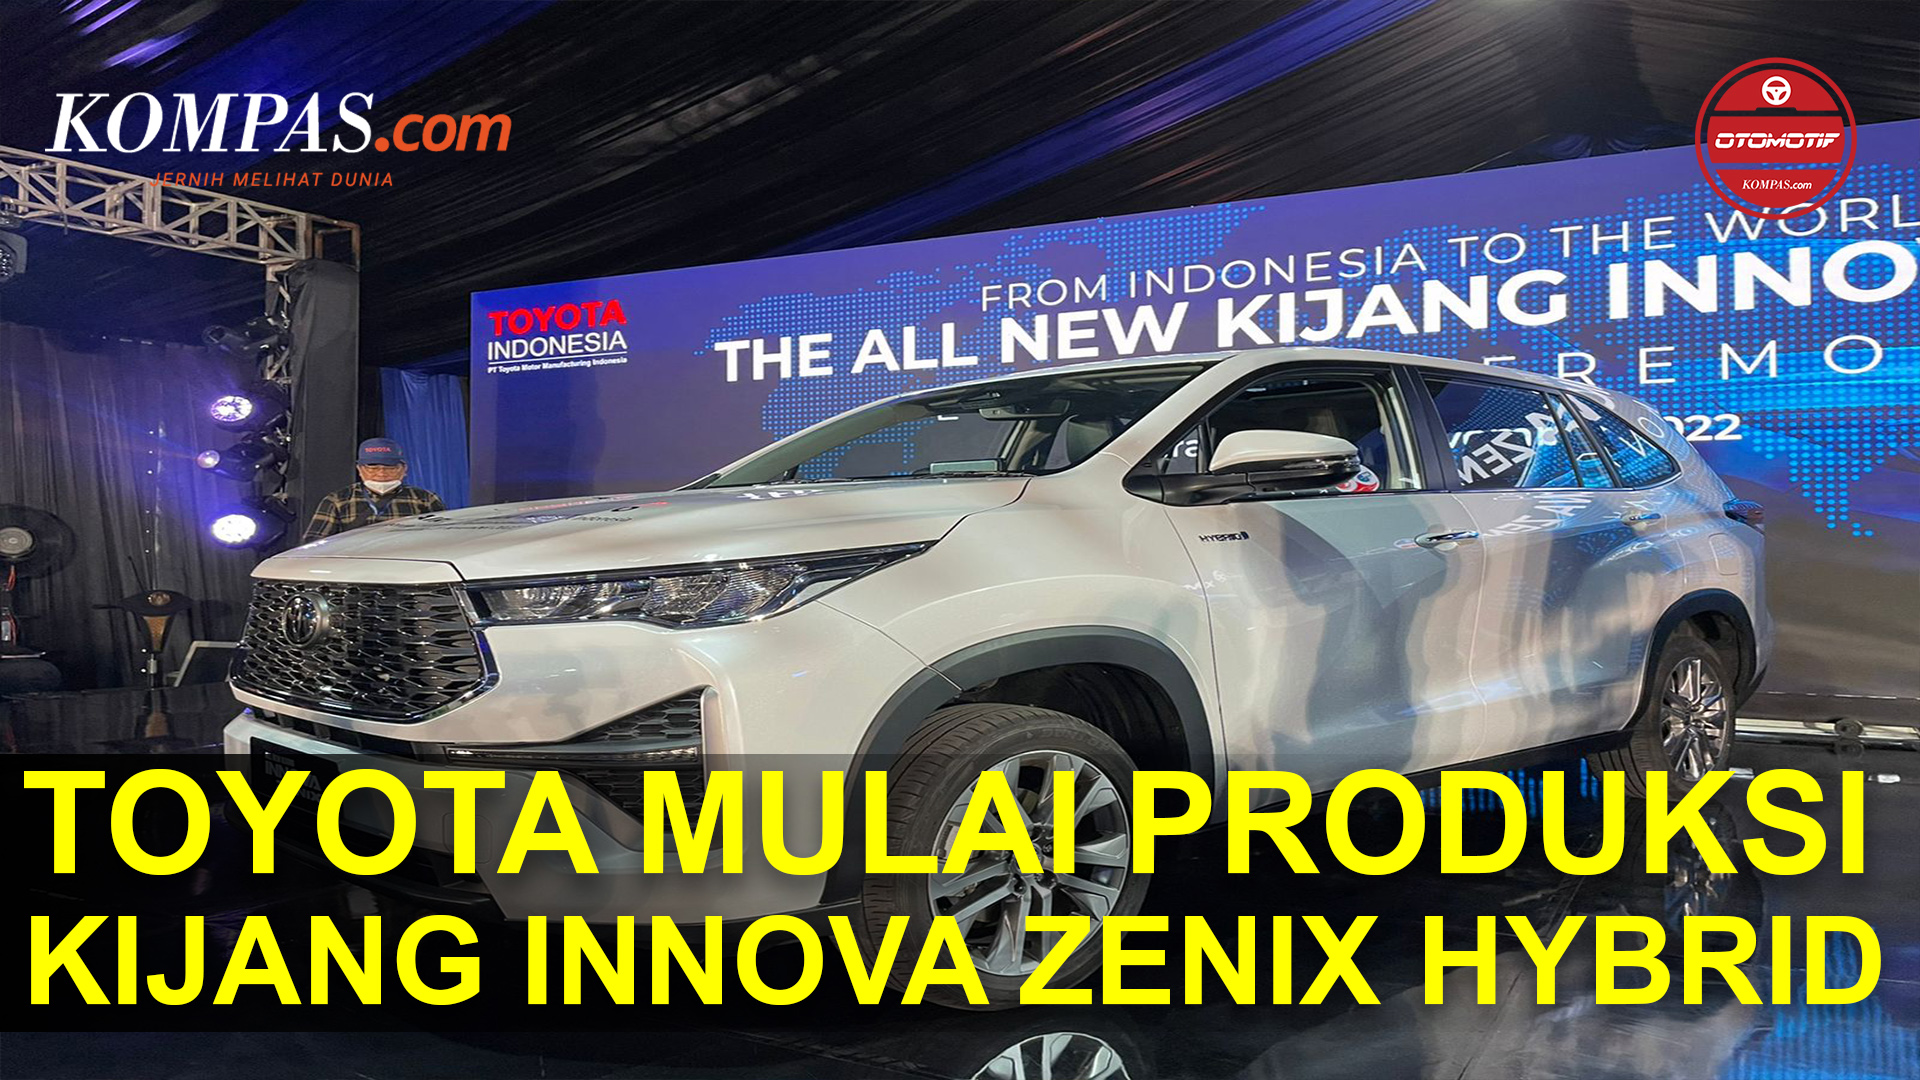 Toyota Mulai Produksi Kijang Innova Zenix Hybrid